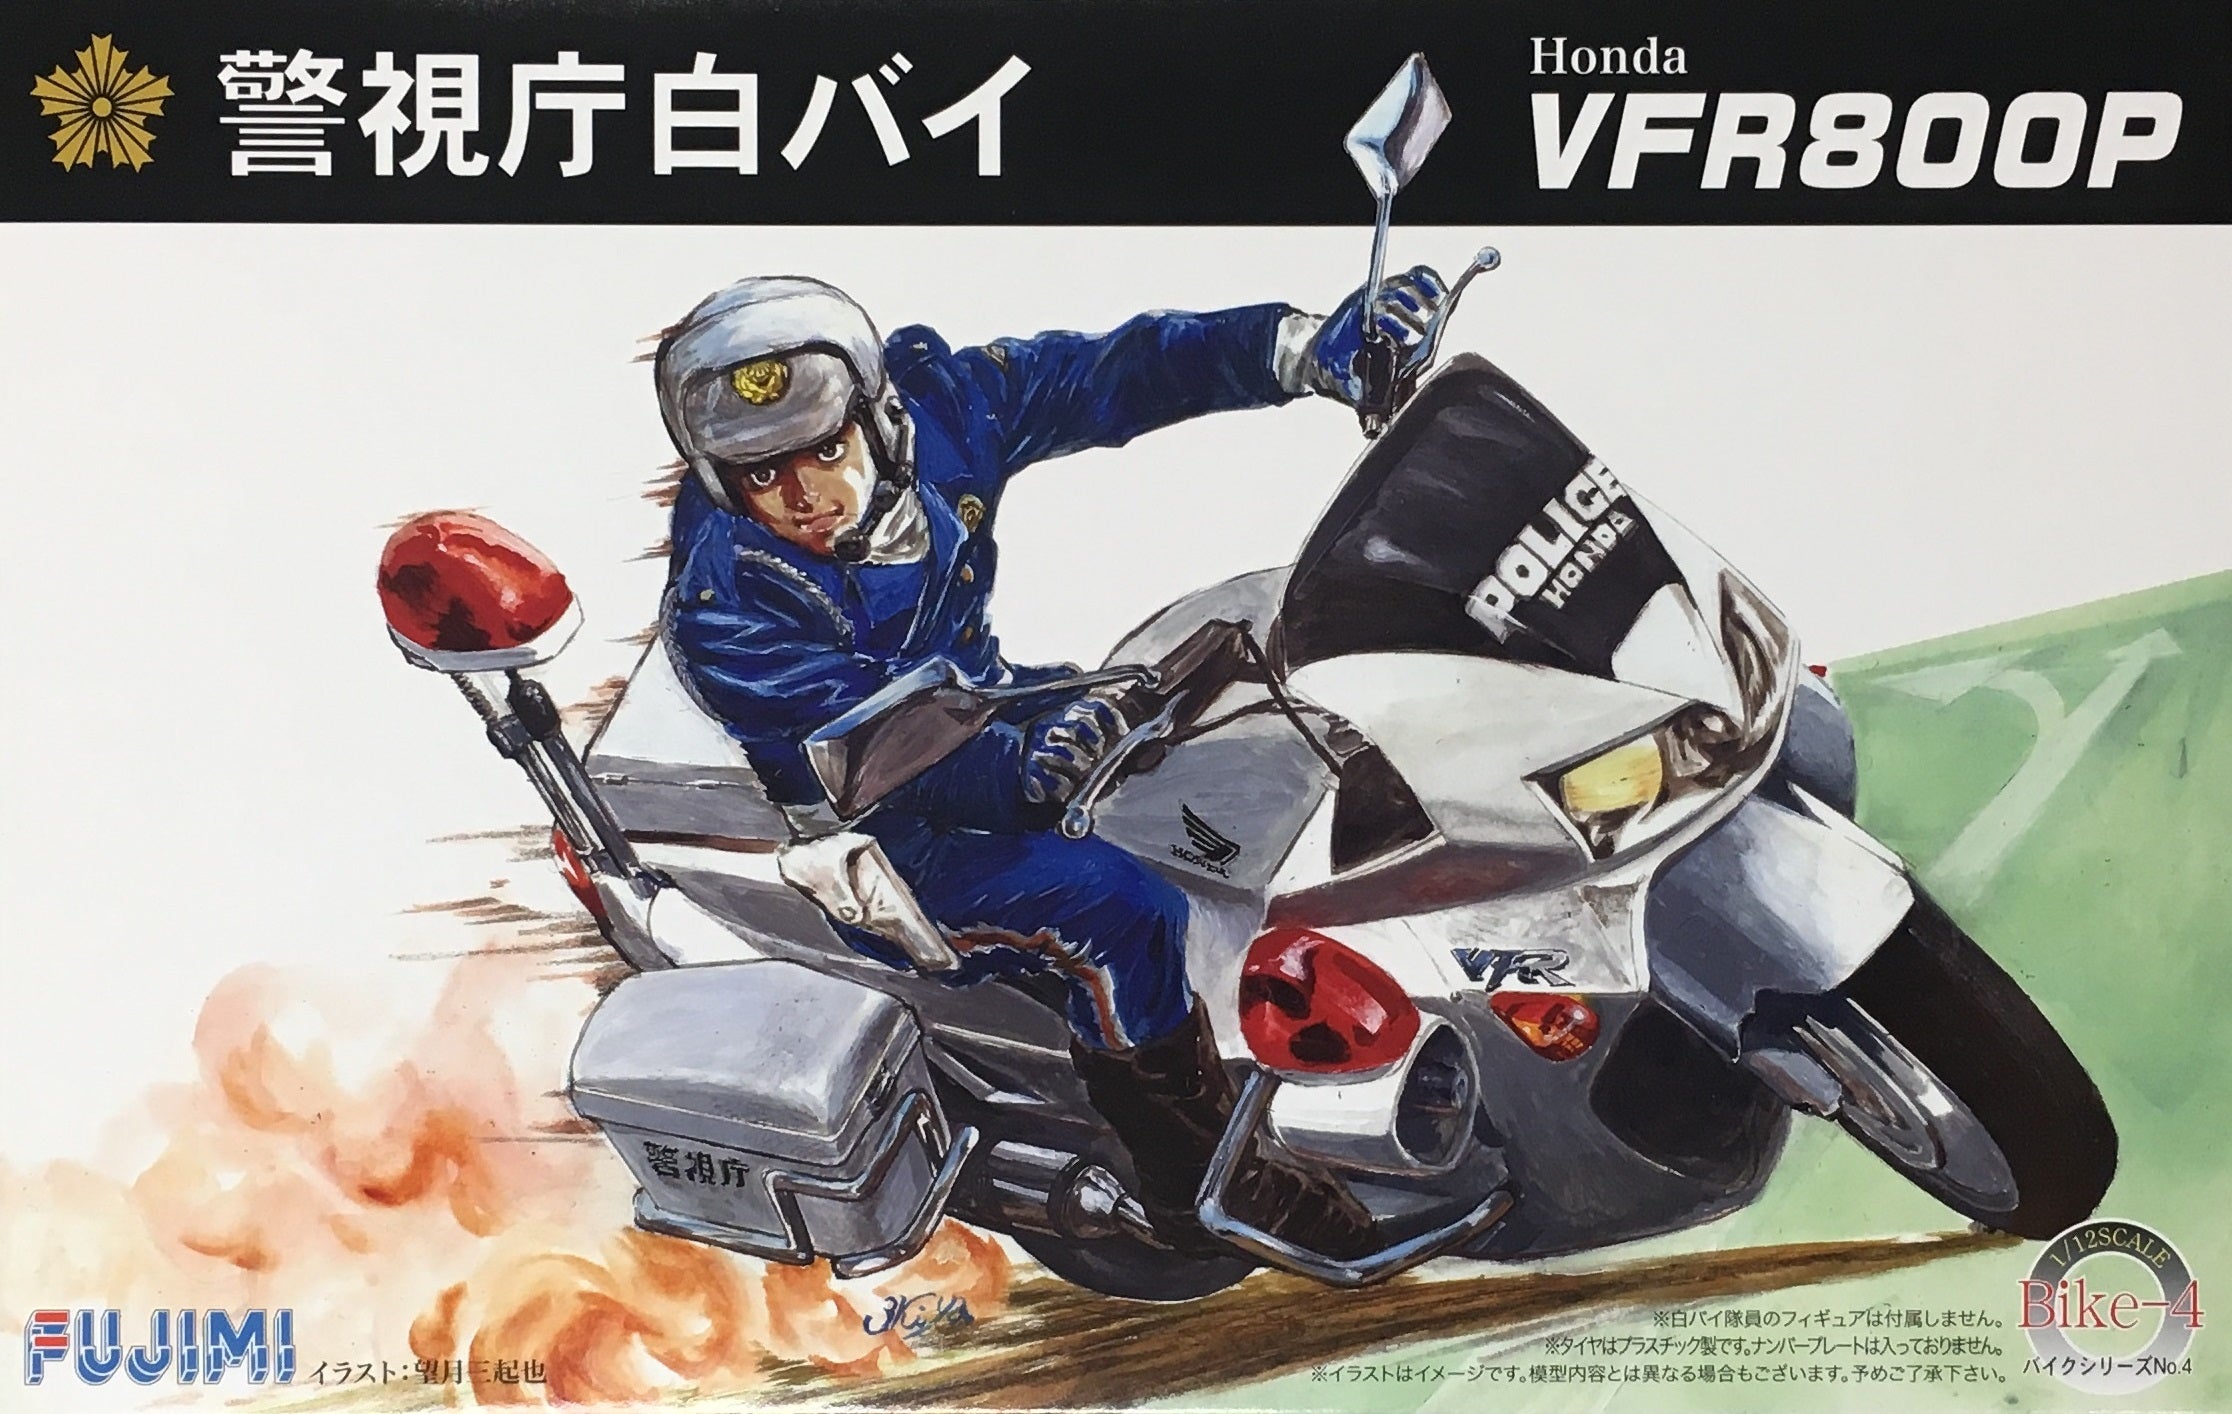 1/12 Honda VFR800P Motorcycle Police